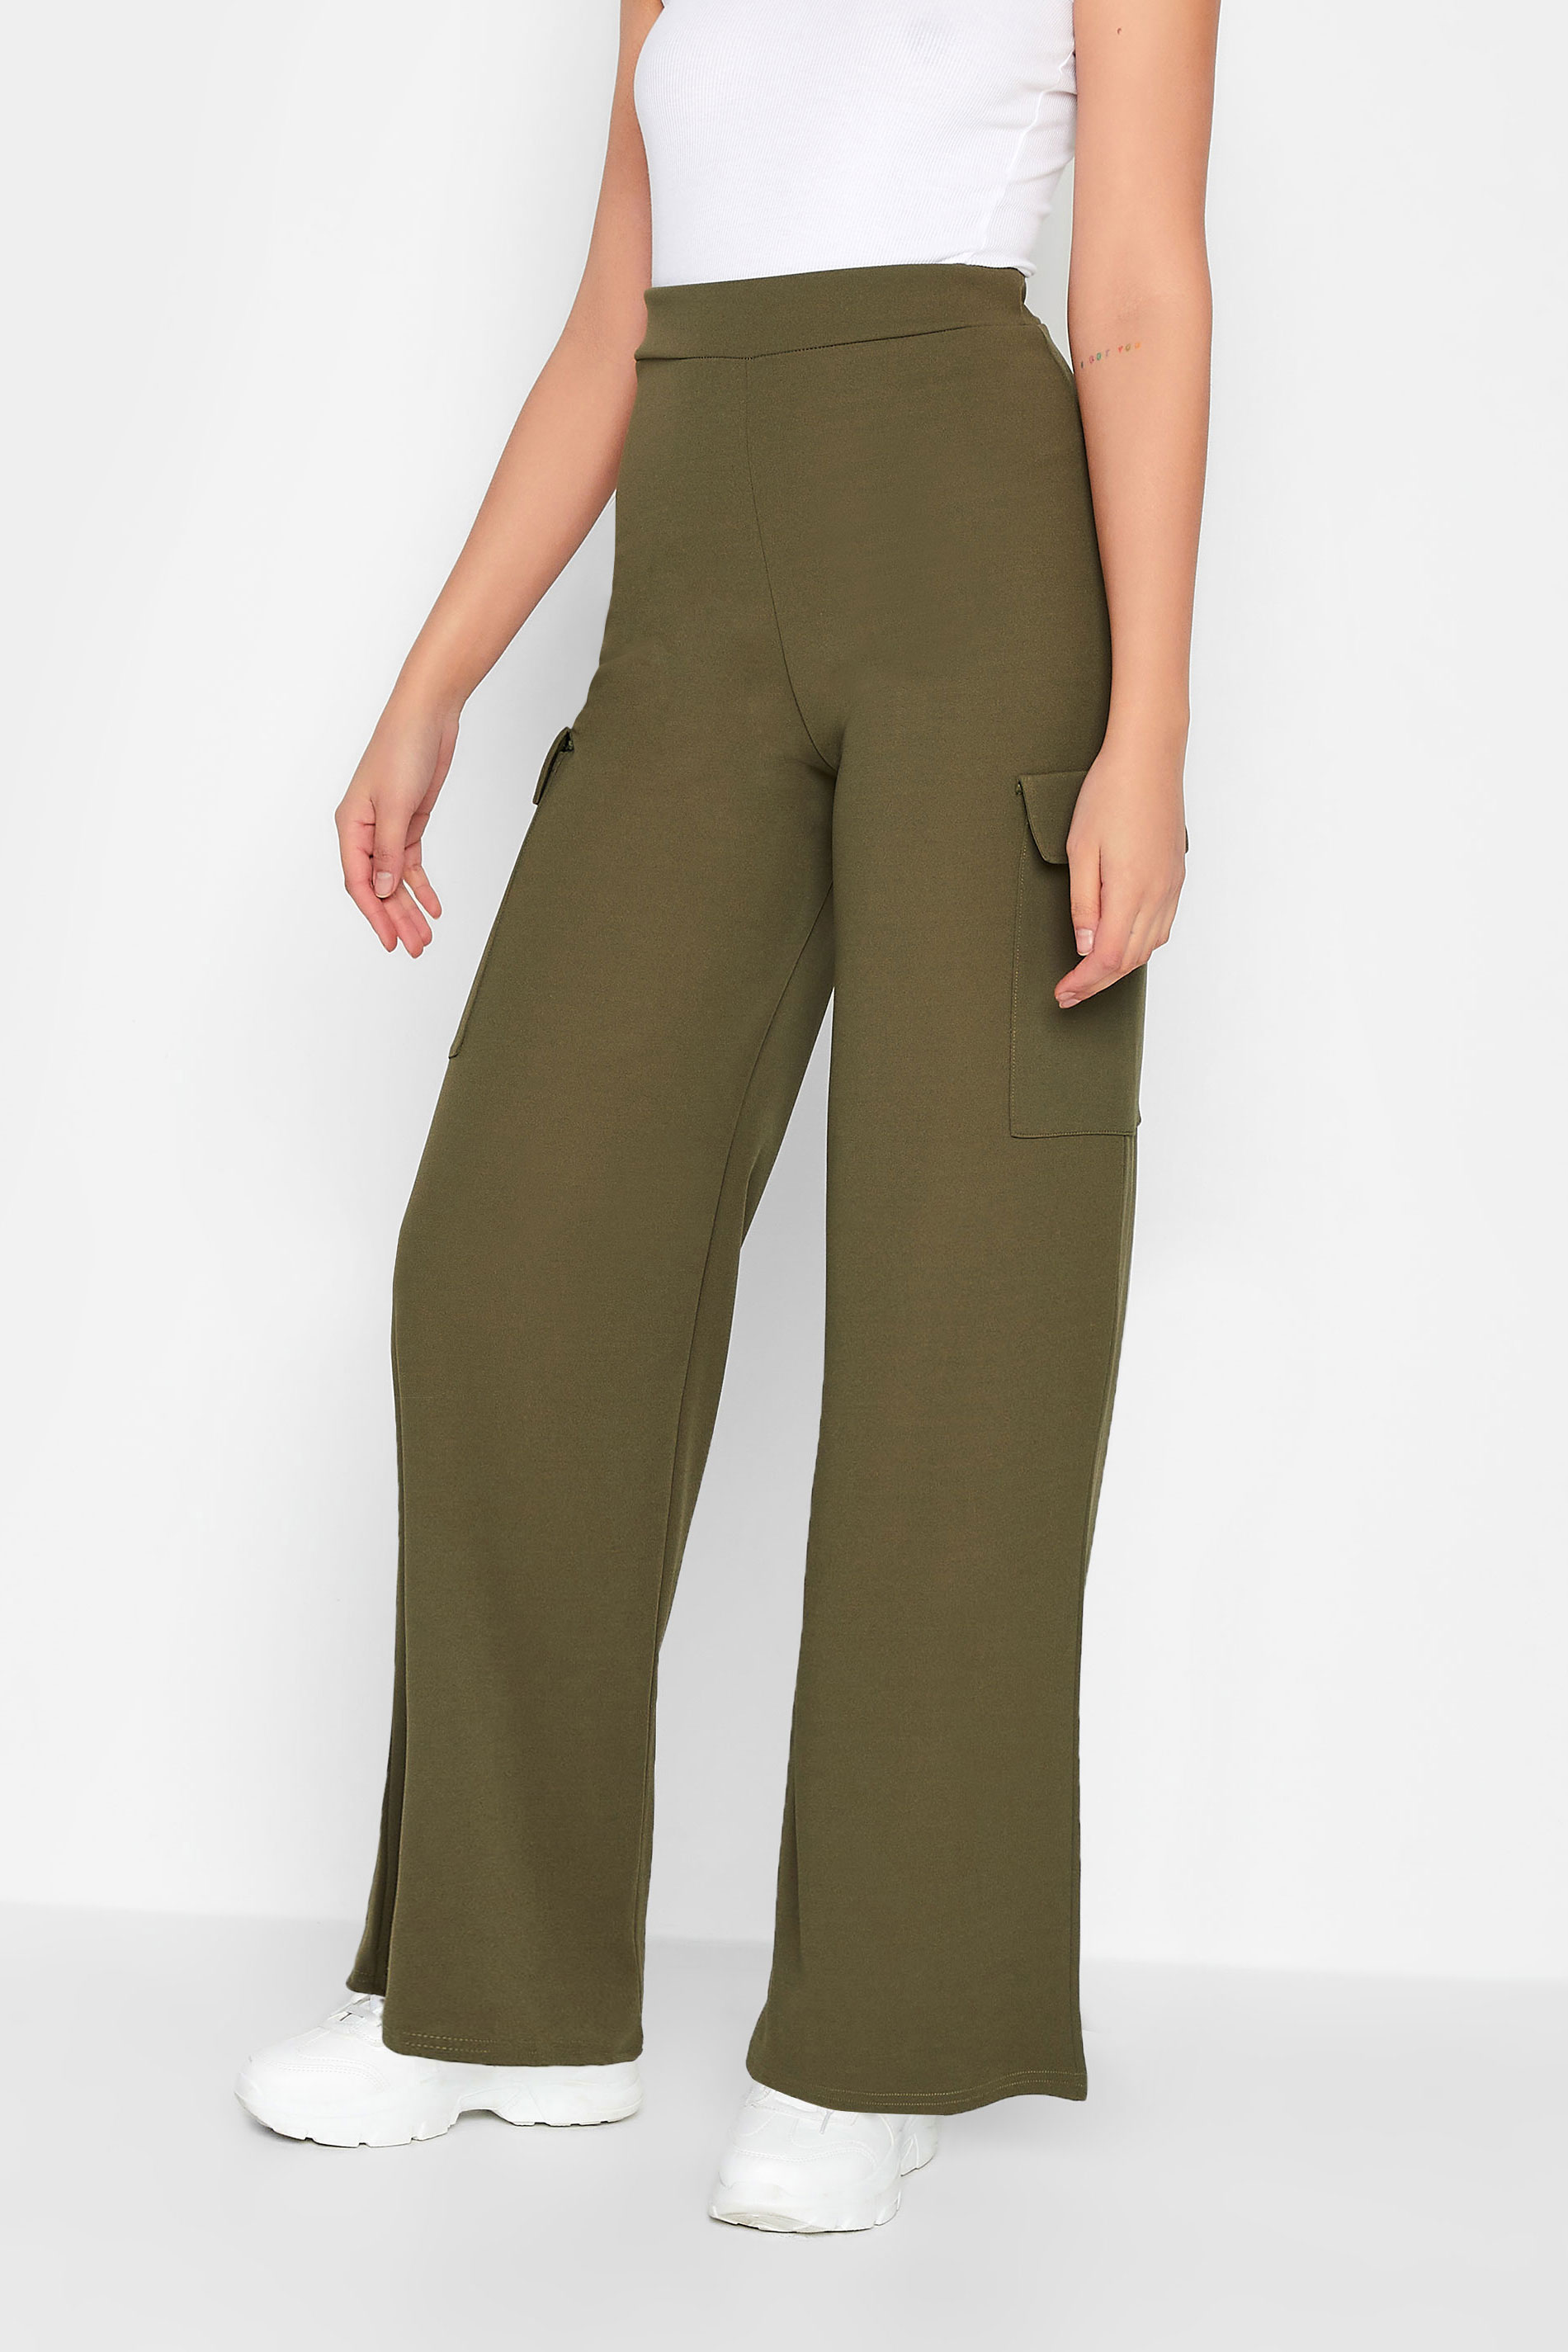 LTS Tall Khaki Green Wide Leg Cargo Trousers | Long Tall Sally  1